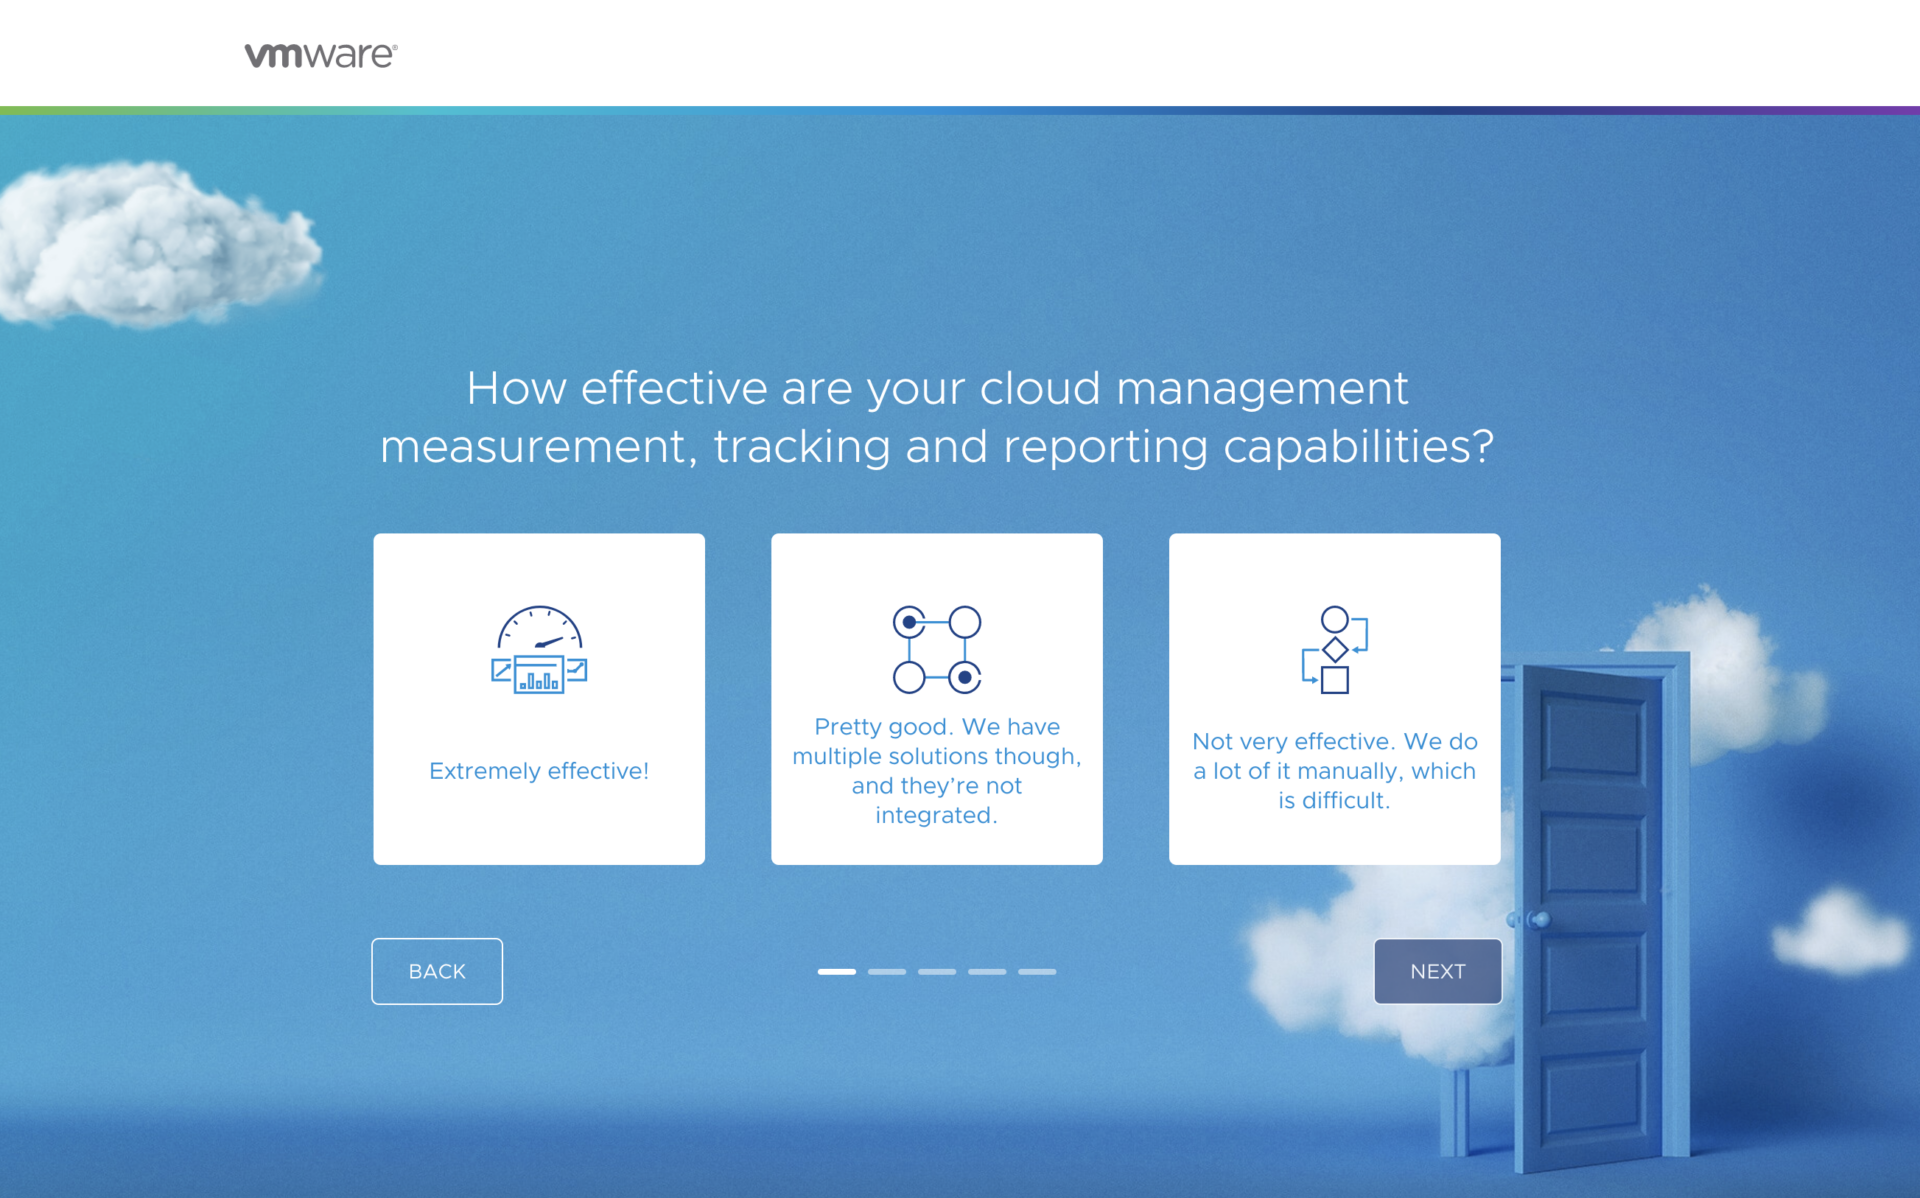 VMWare: Cloud Ready Product Quiz 